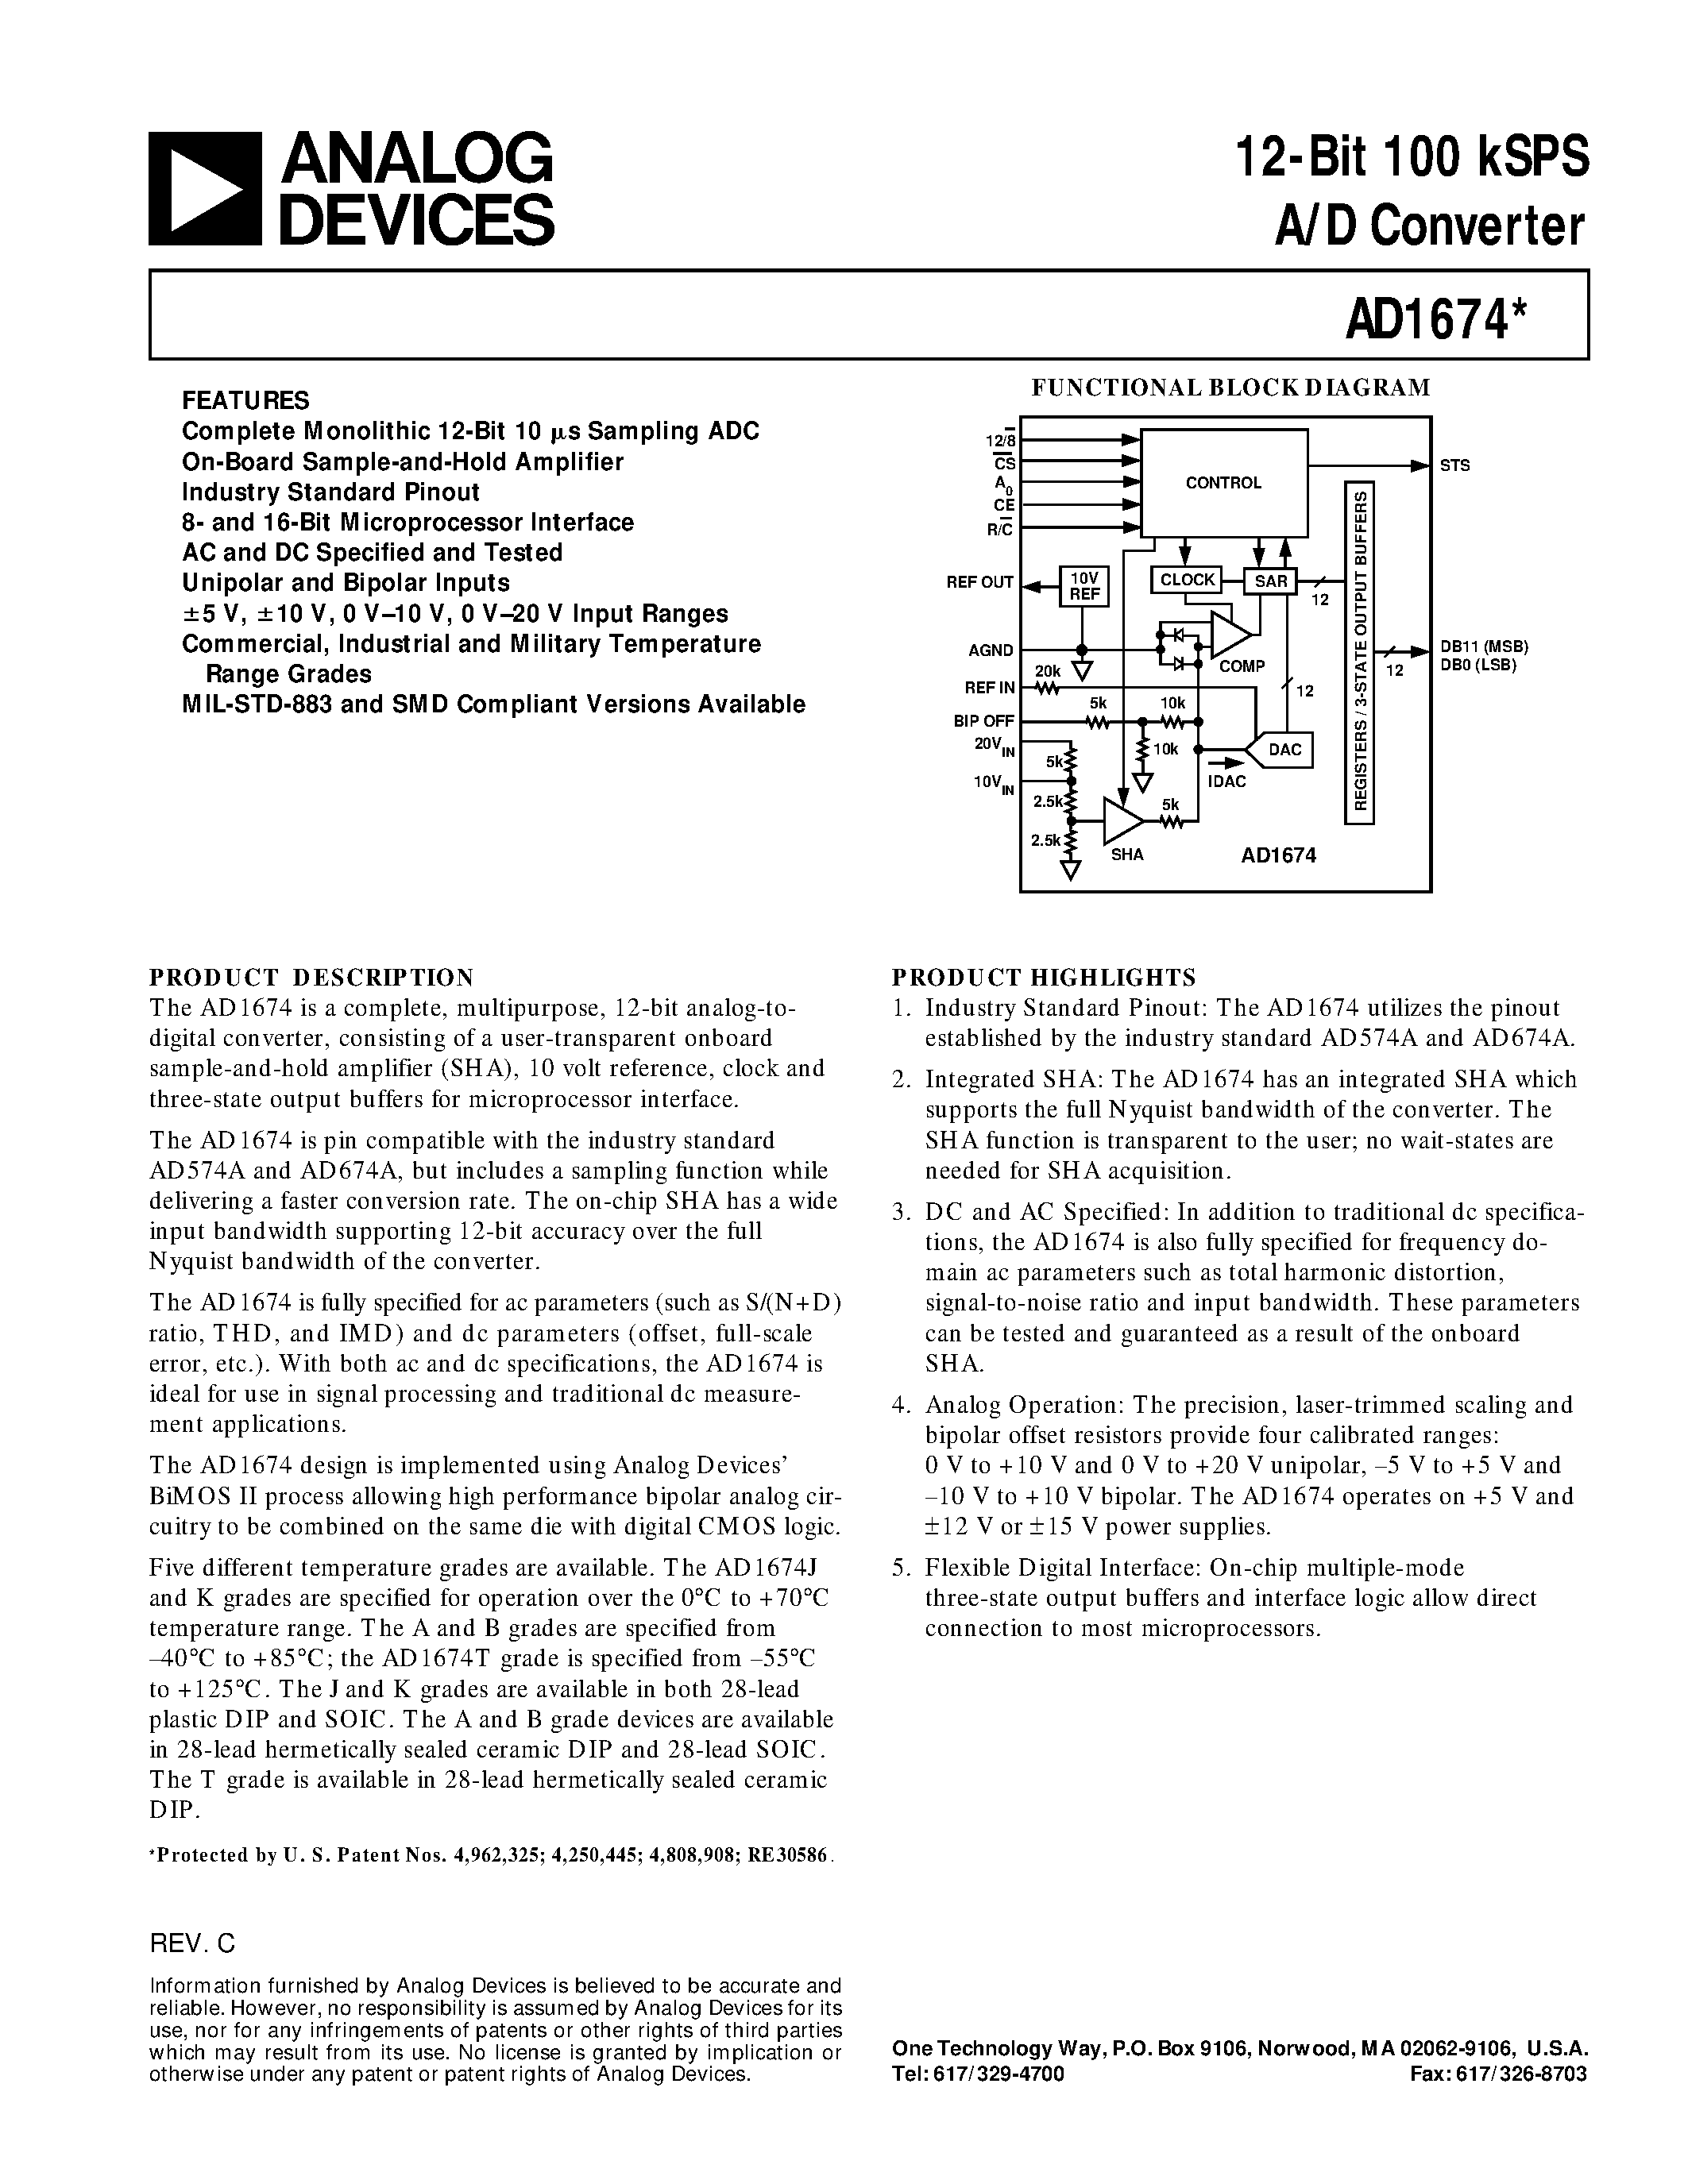 Datasheet AD1674BR - 12-Bit 100 kSPS A/D Converter page 1